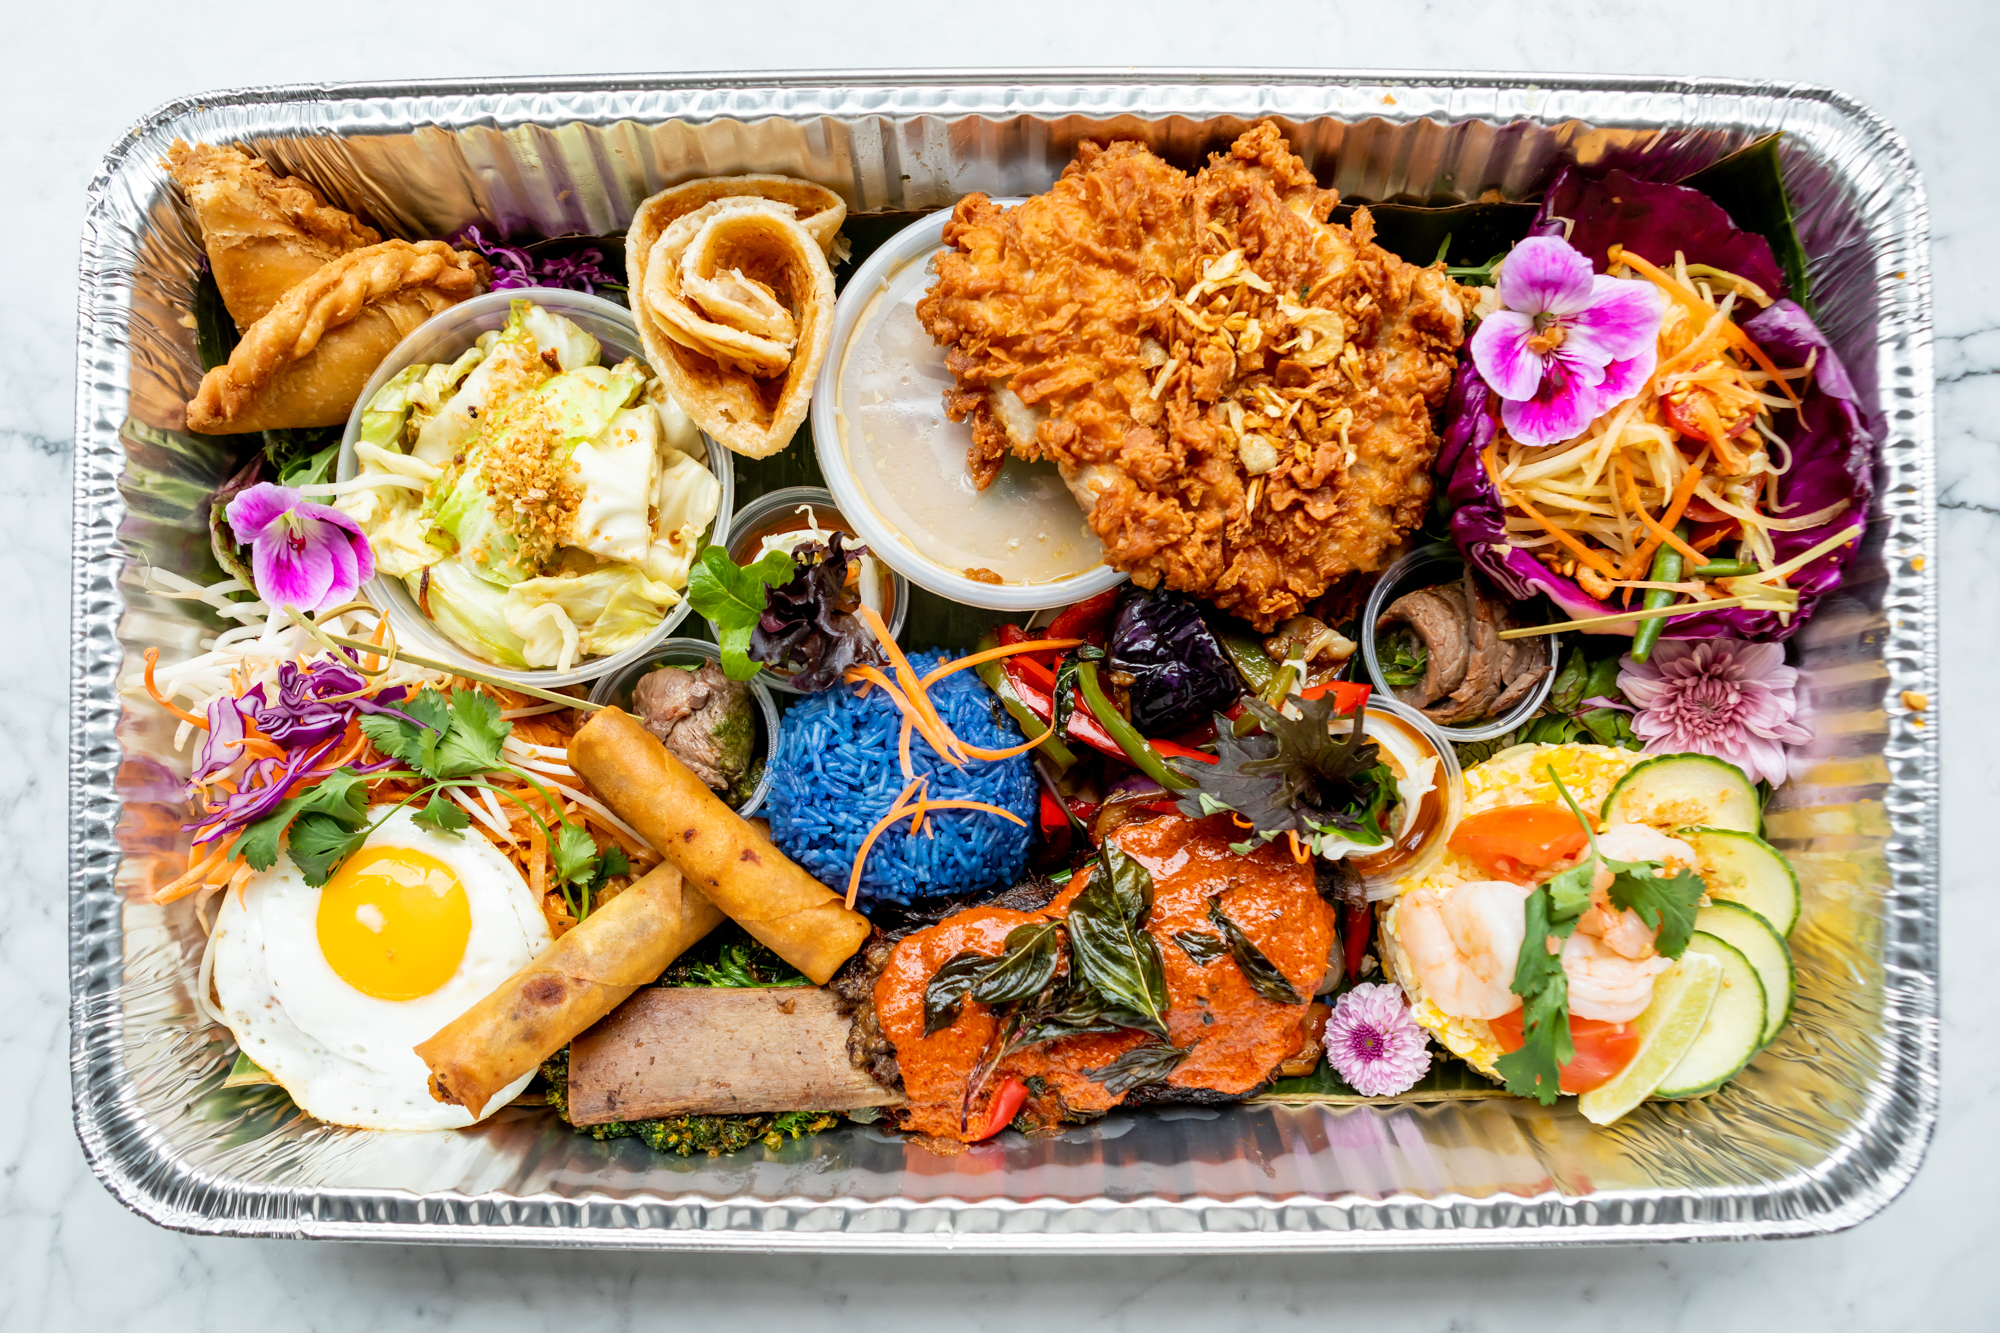 The “Lao Table” takeout tray from Farmhouse Kitchen Thai